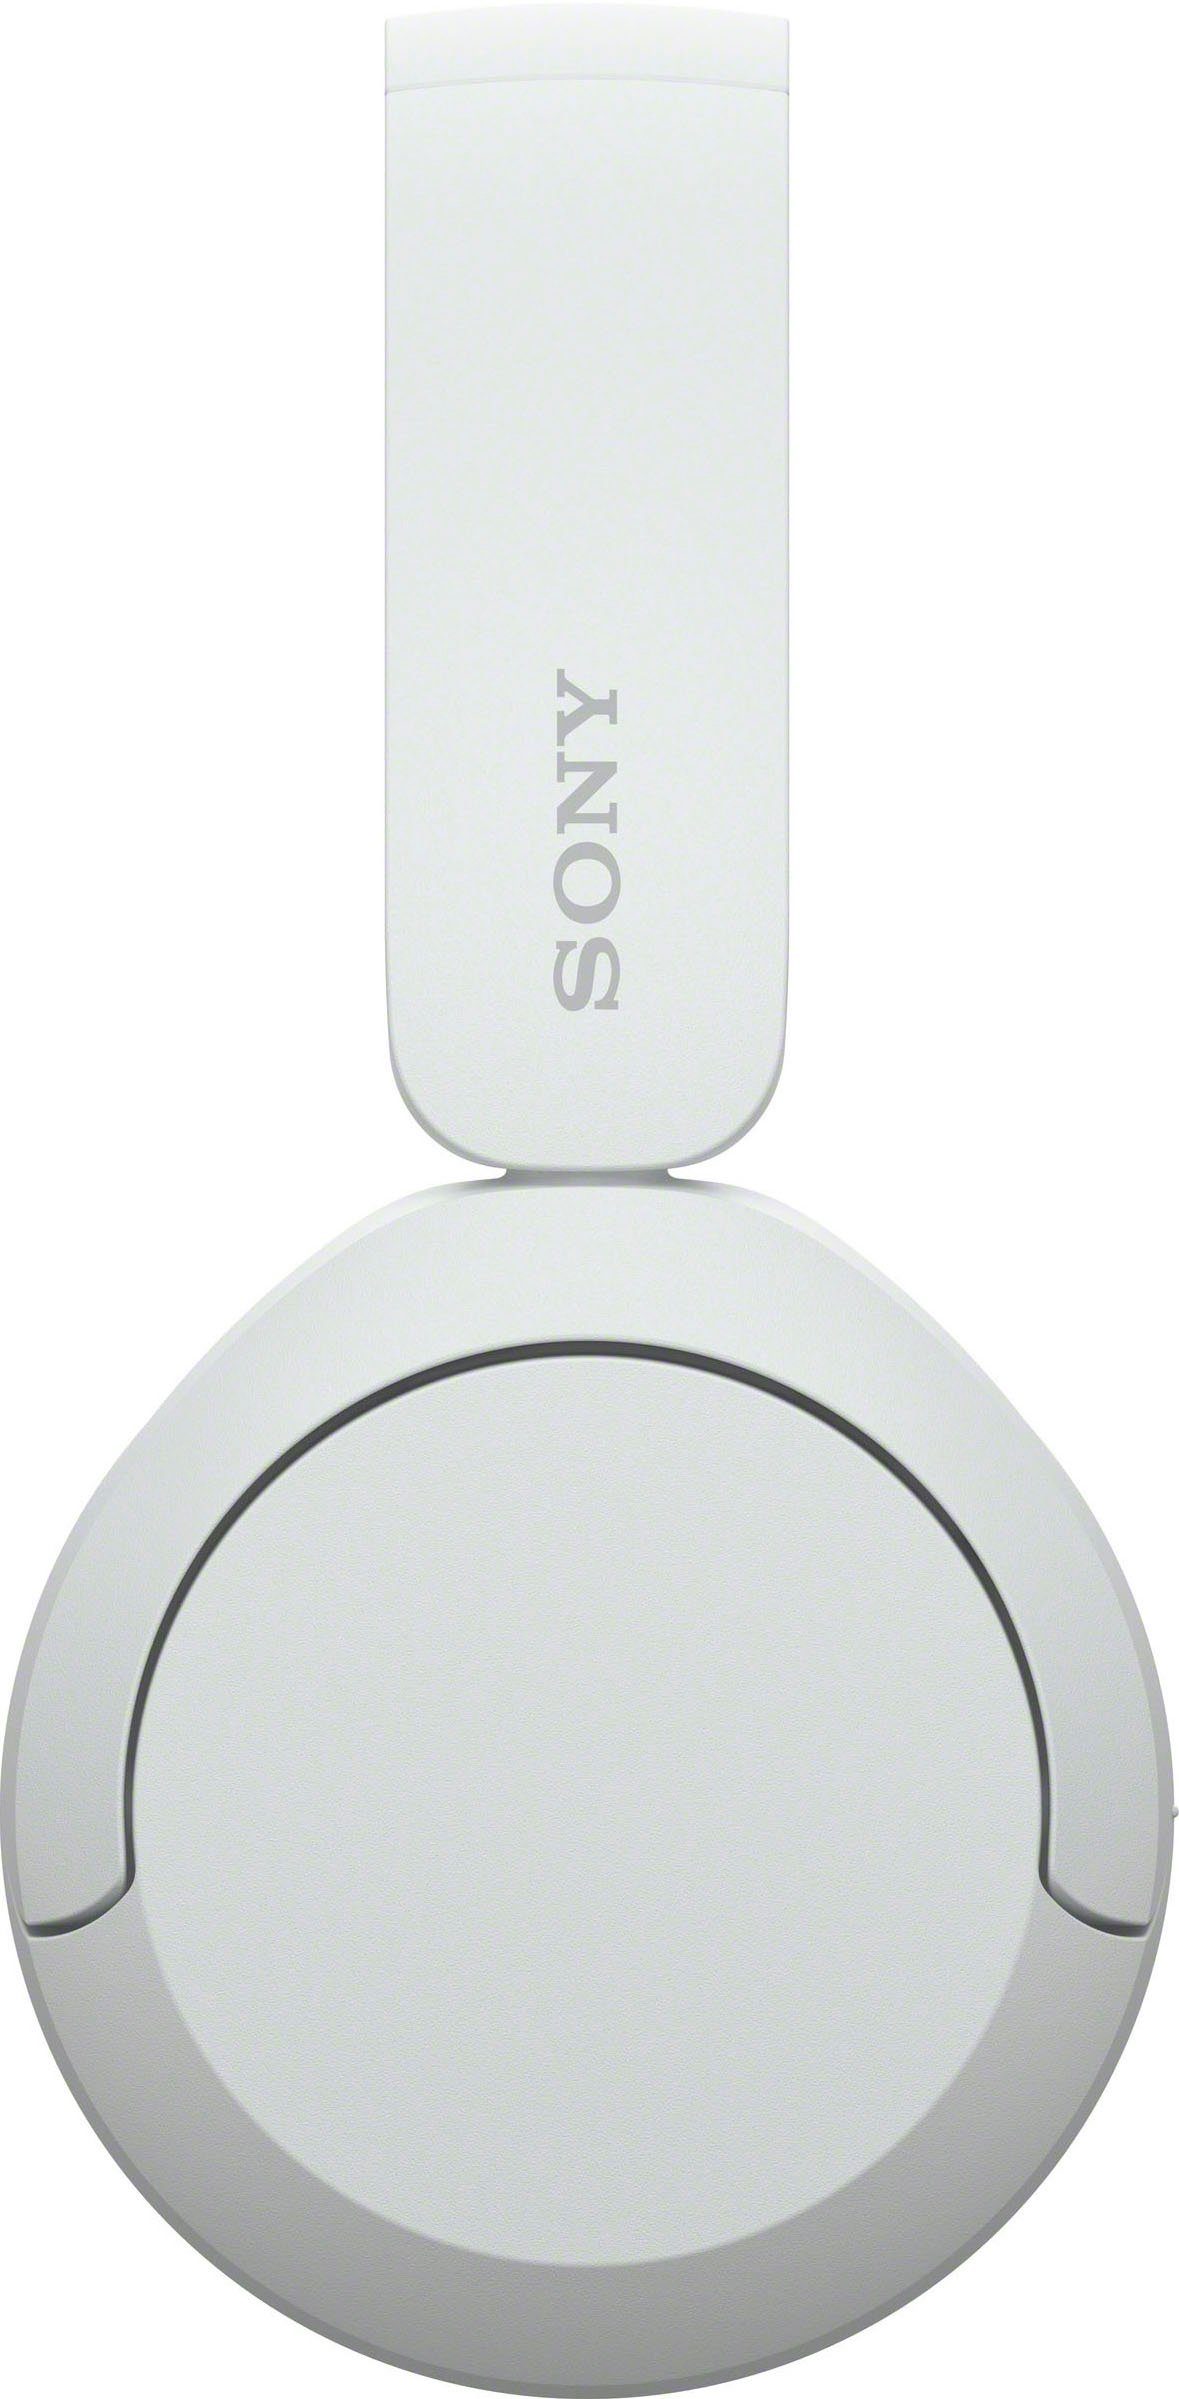 WHCH520 On-Ear-Kopfhörer Rauschunterdrückung, 50 Sony (Freisprechfunktion, Bluetooth, Std. Assistant, Siri, Akkulaufzeit) Google